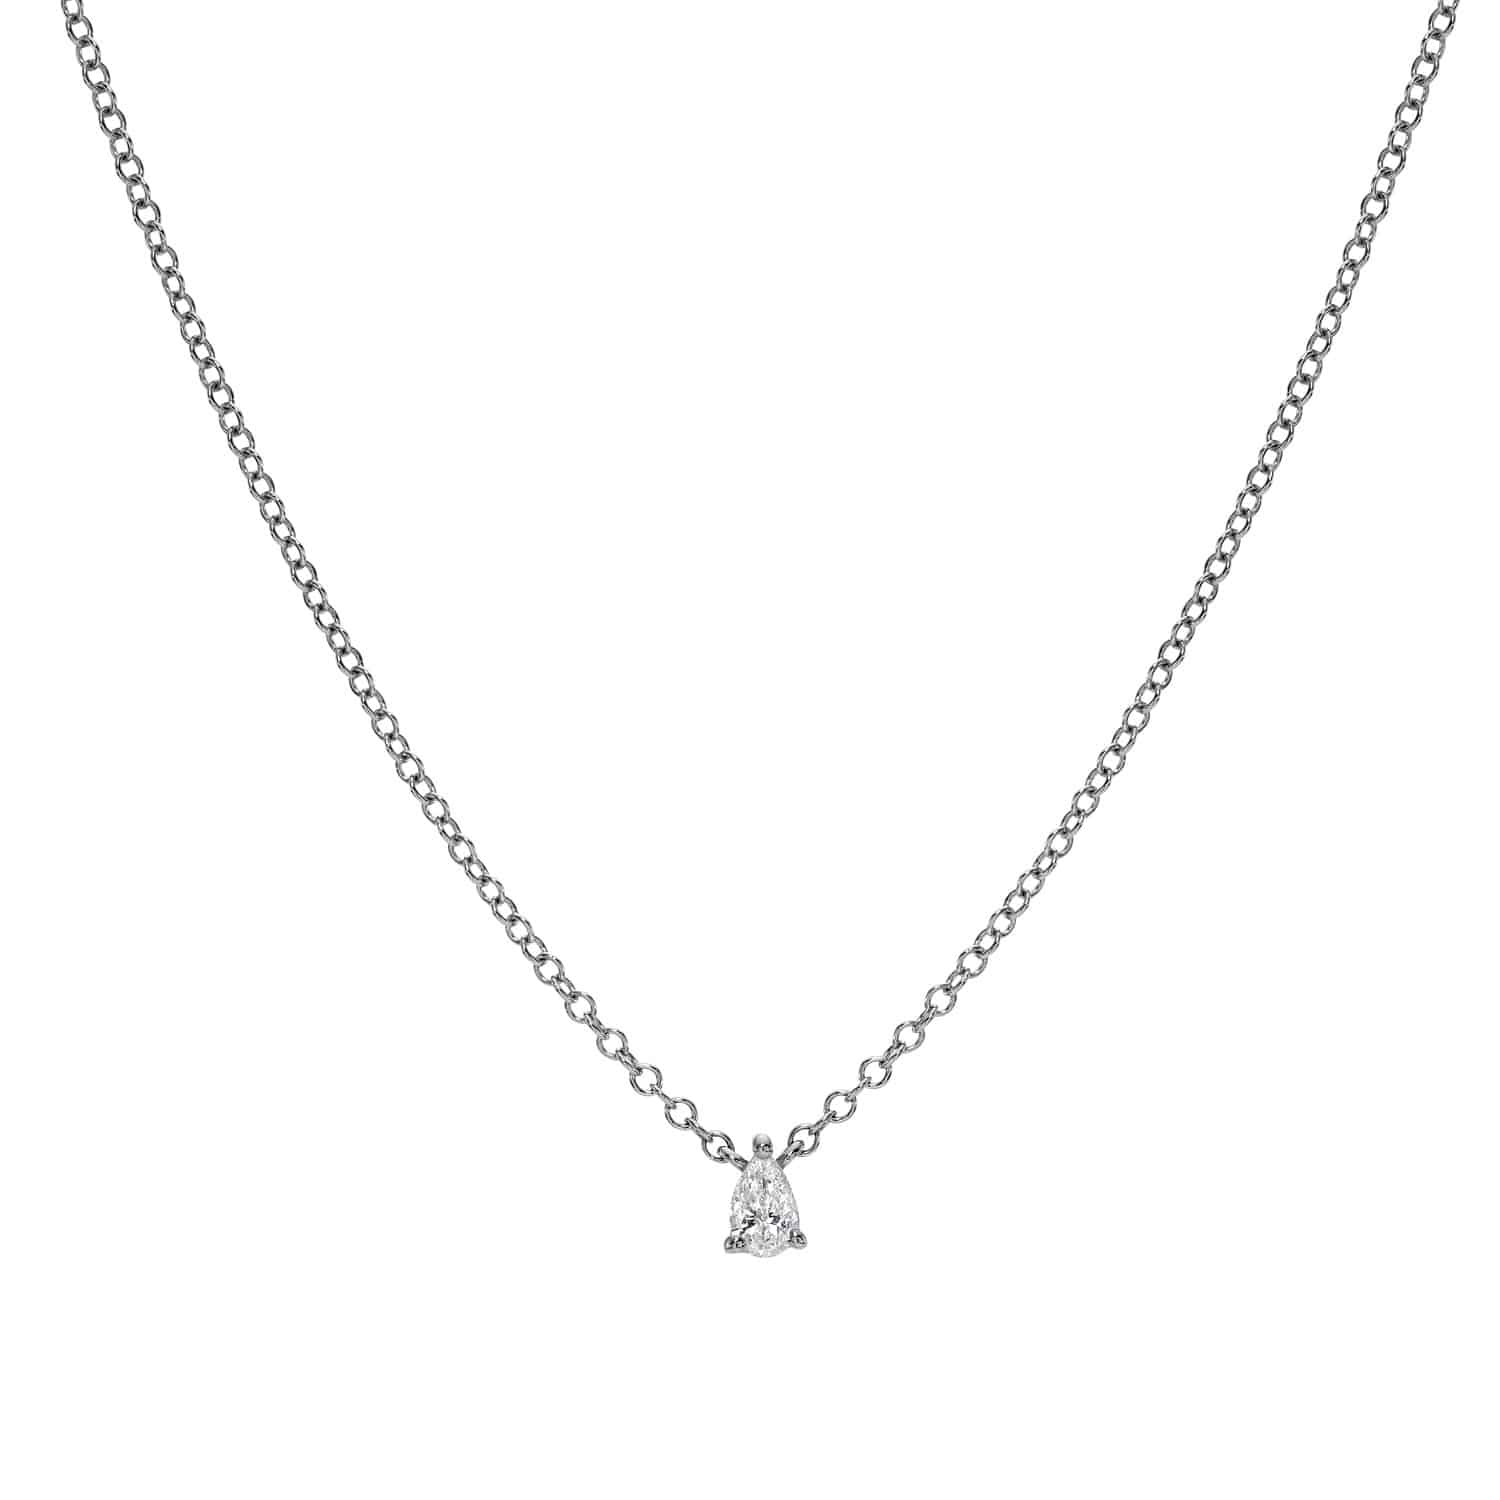 Solitaire Pear Cut Diamond Necklace